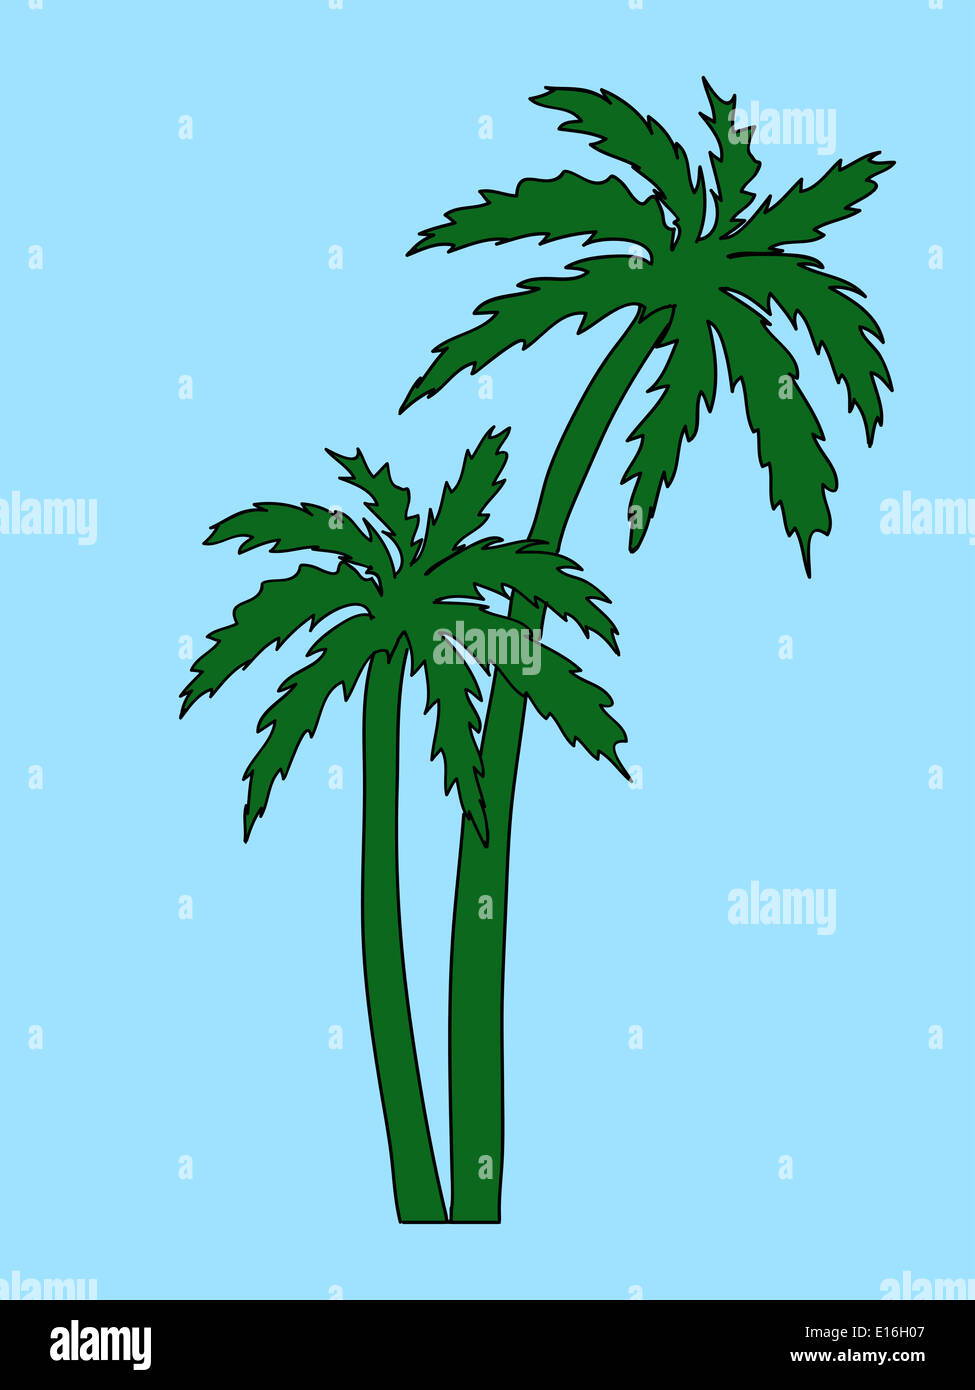 Palm trees illustration Stock Photo